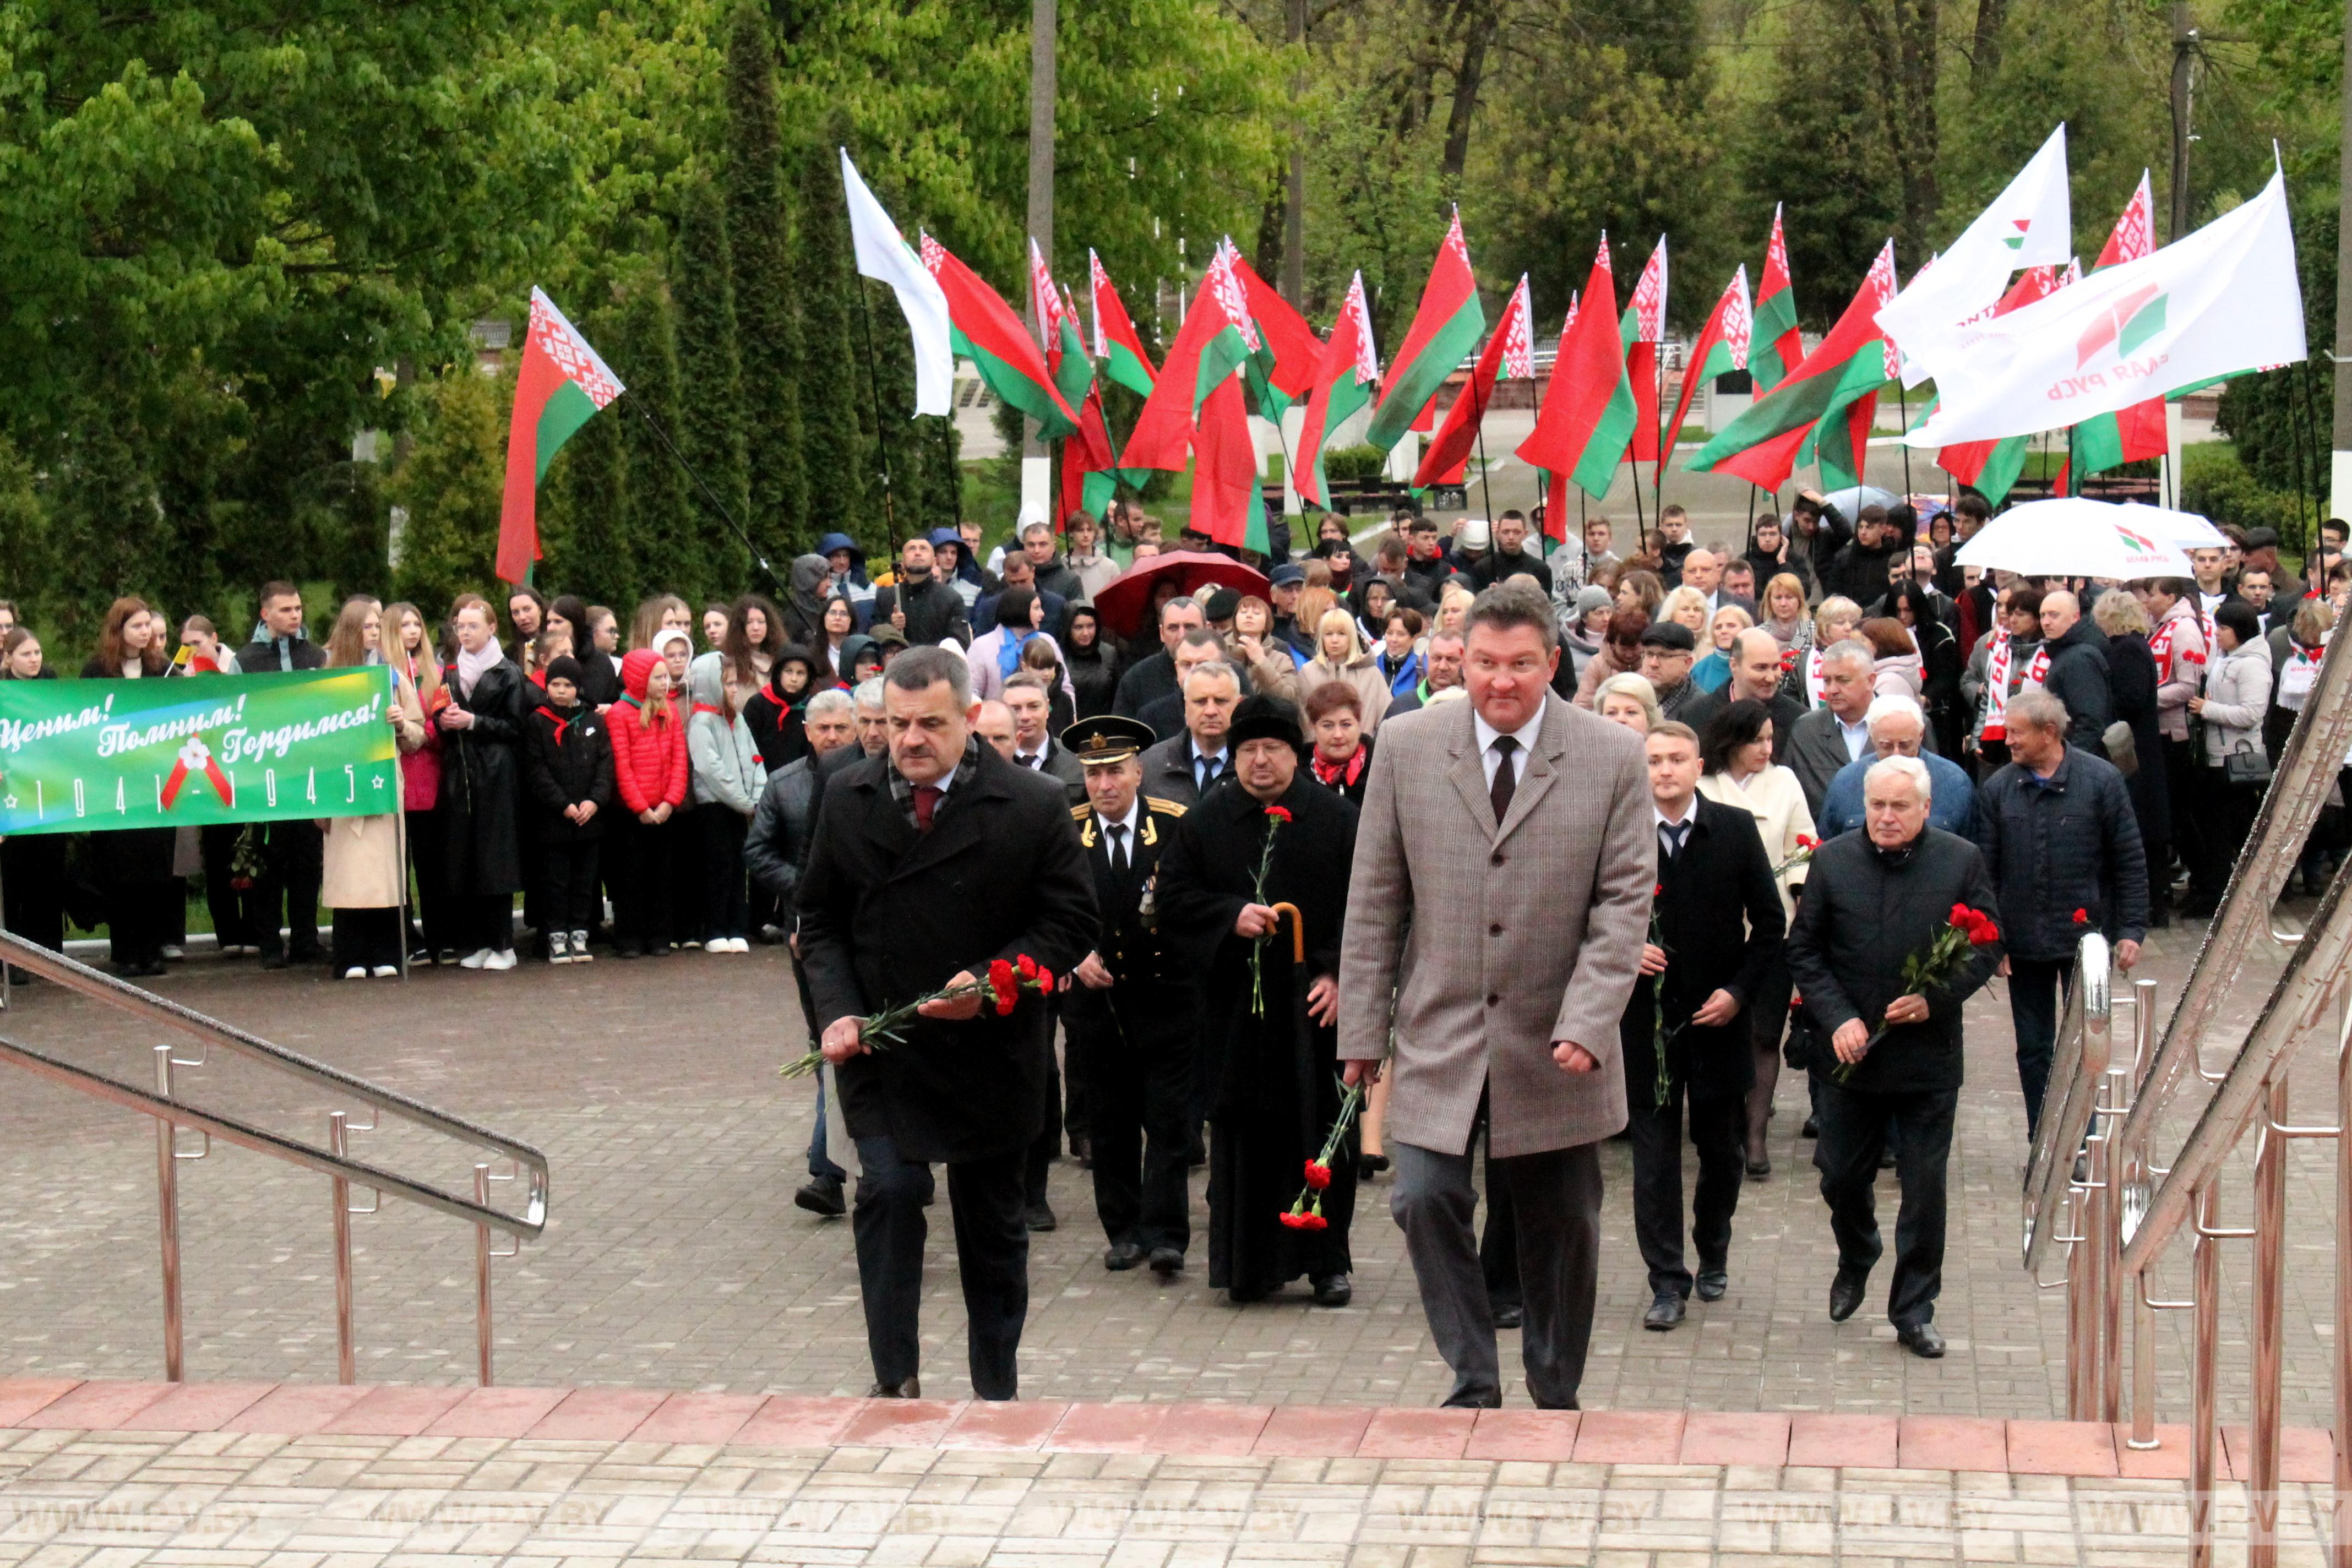 В год 80-летия освобождения Беларуси от немецко-фашистских захватчиков в Пинске заложили аллею победителей